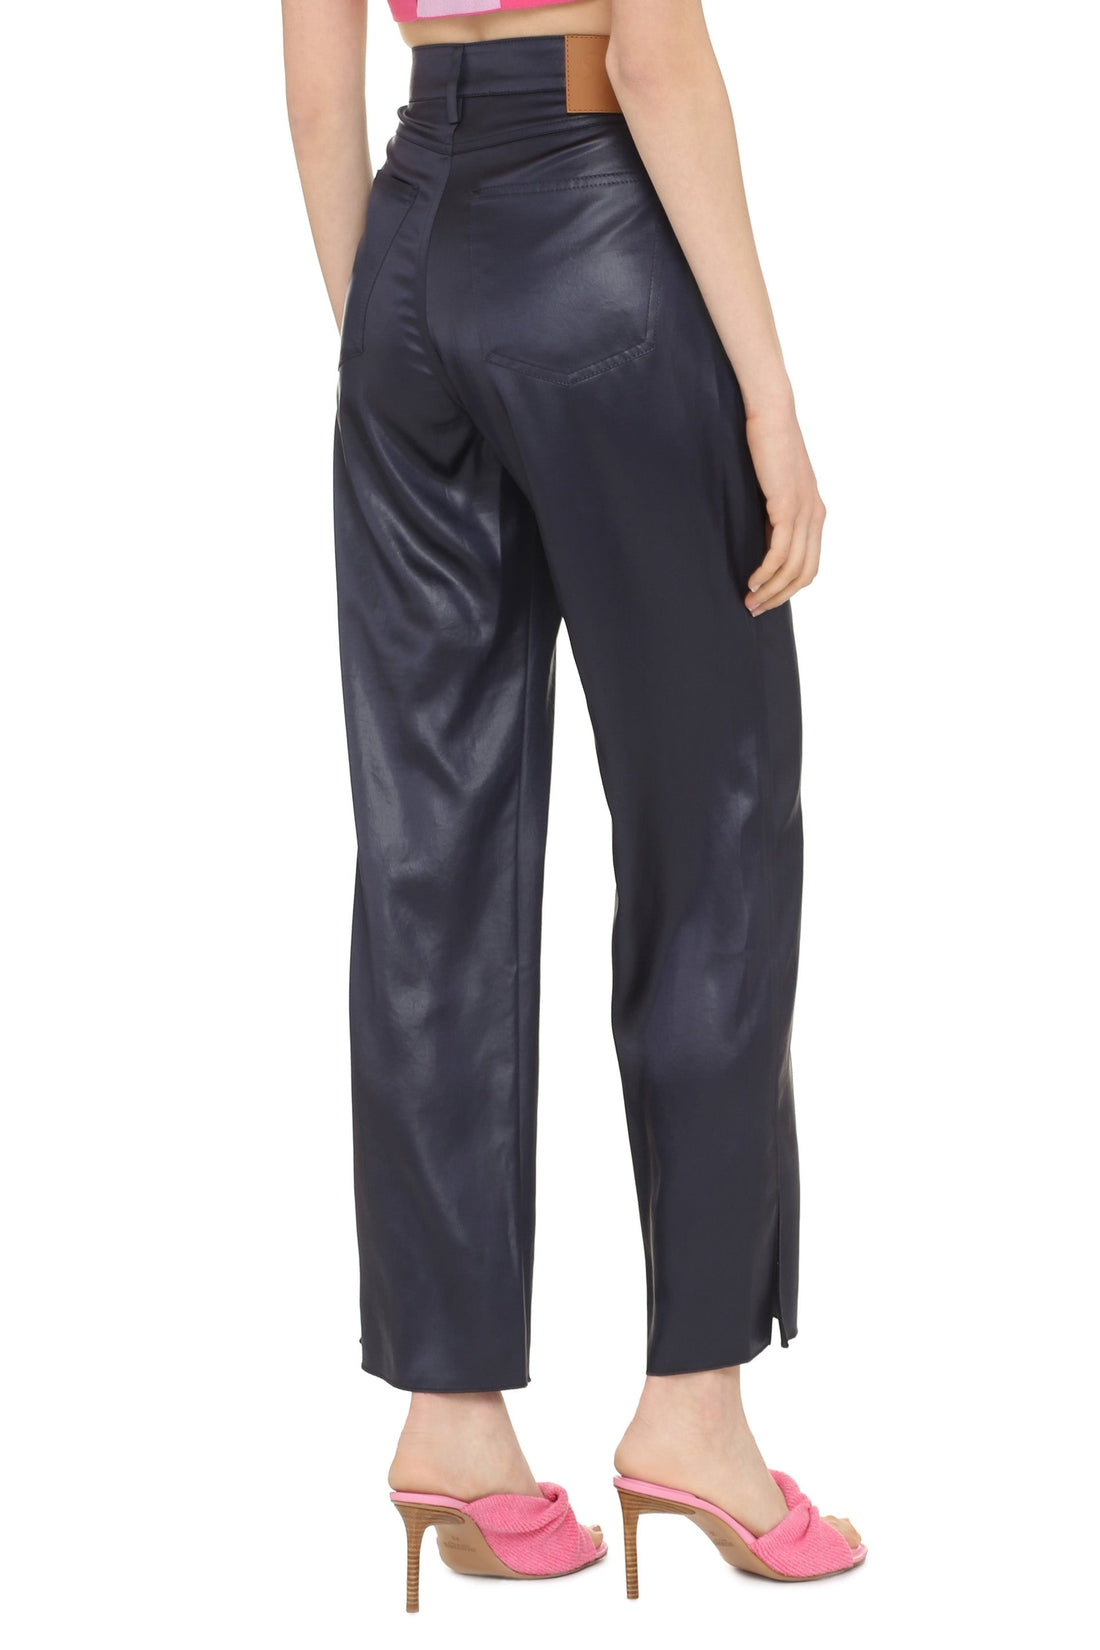 Nanushka-OUTLET-SALE-Vaeda flared trousers-ARCHIVIST